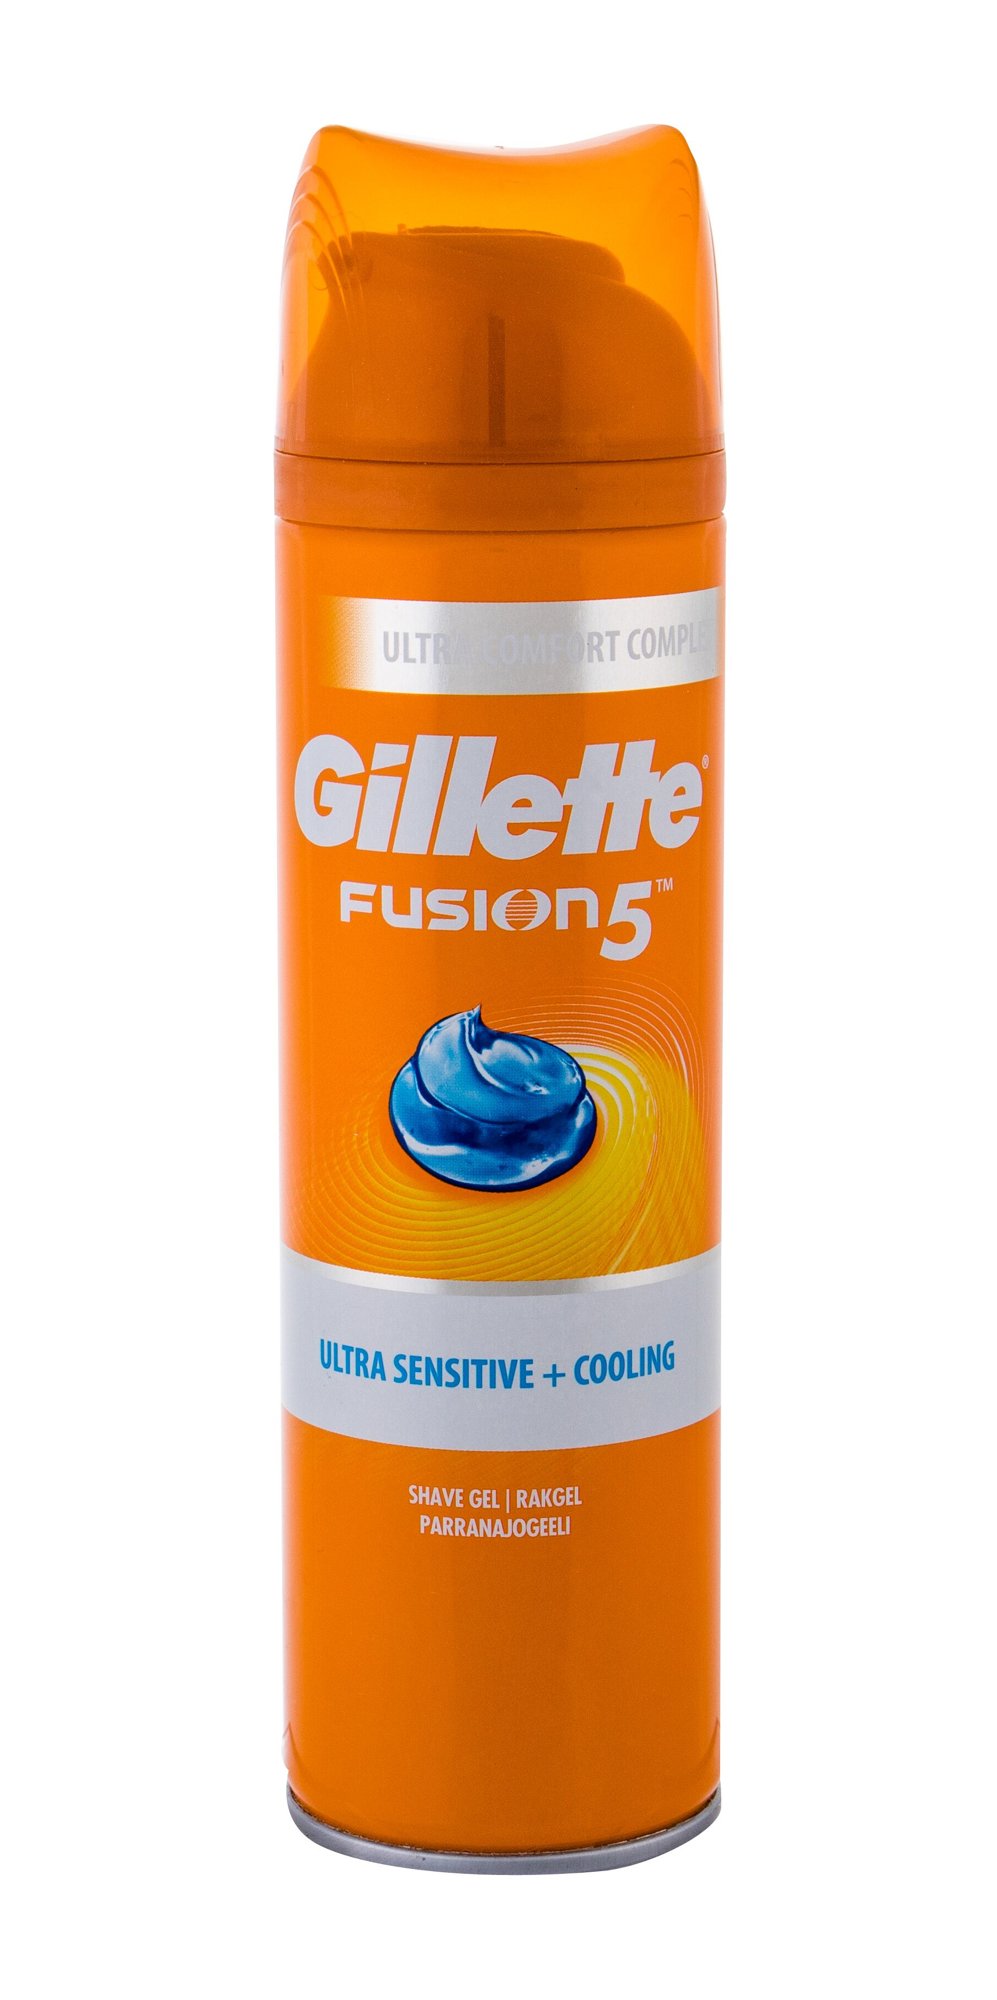 Gillette Fusion 5 Ultra Sensitive + Cooling skutimosi gelis